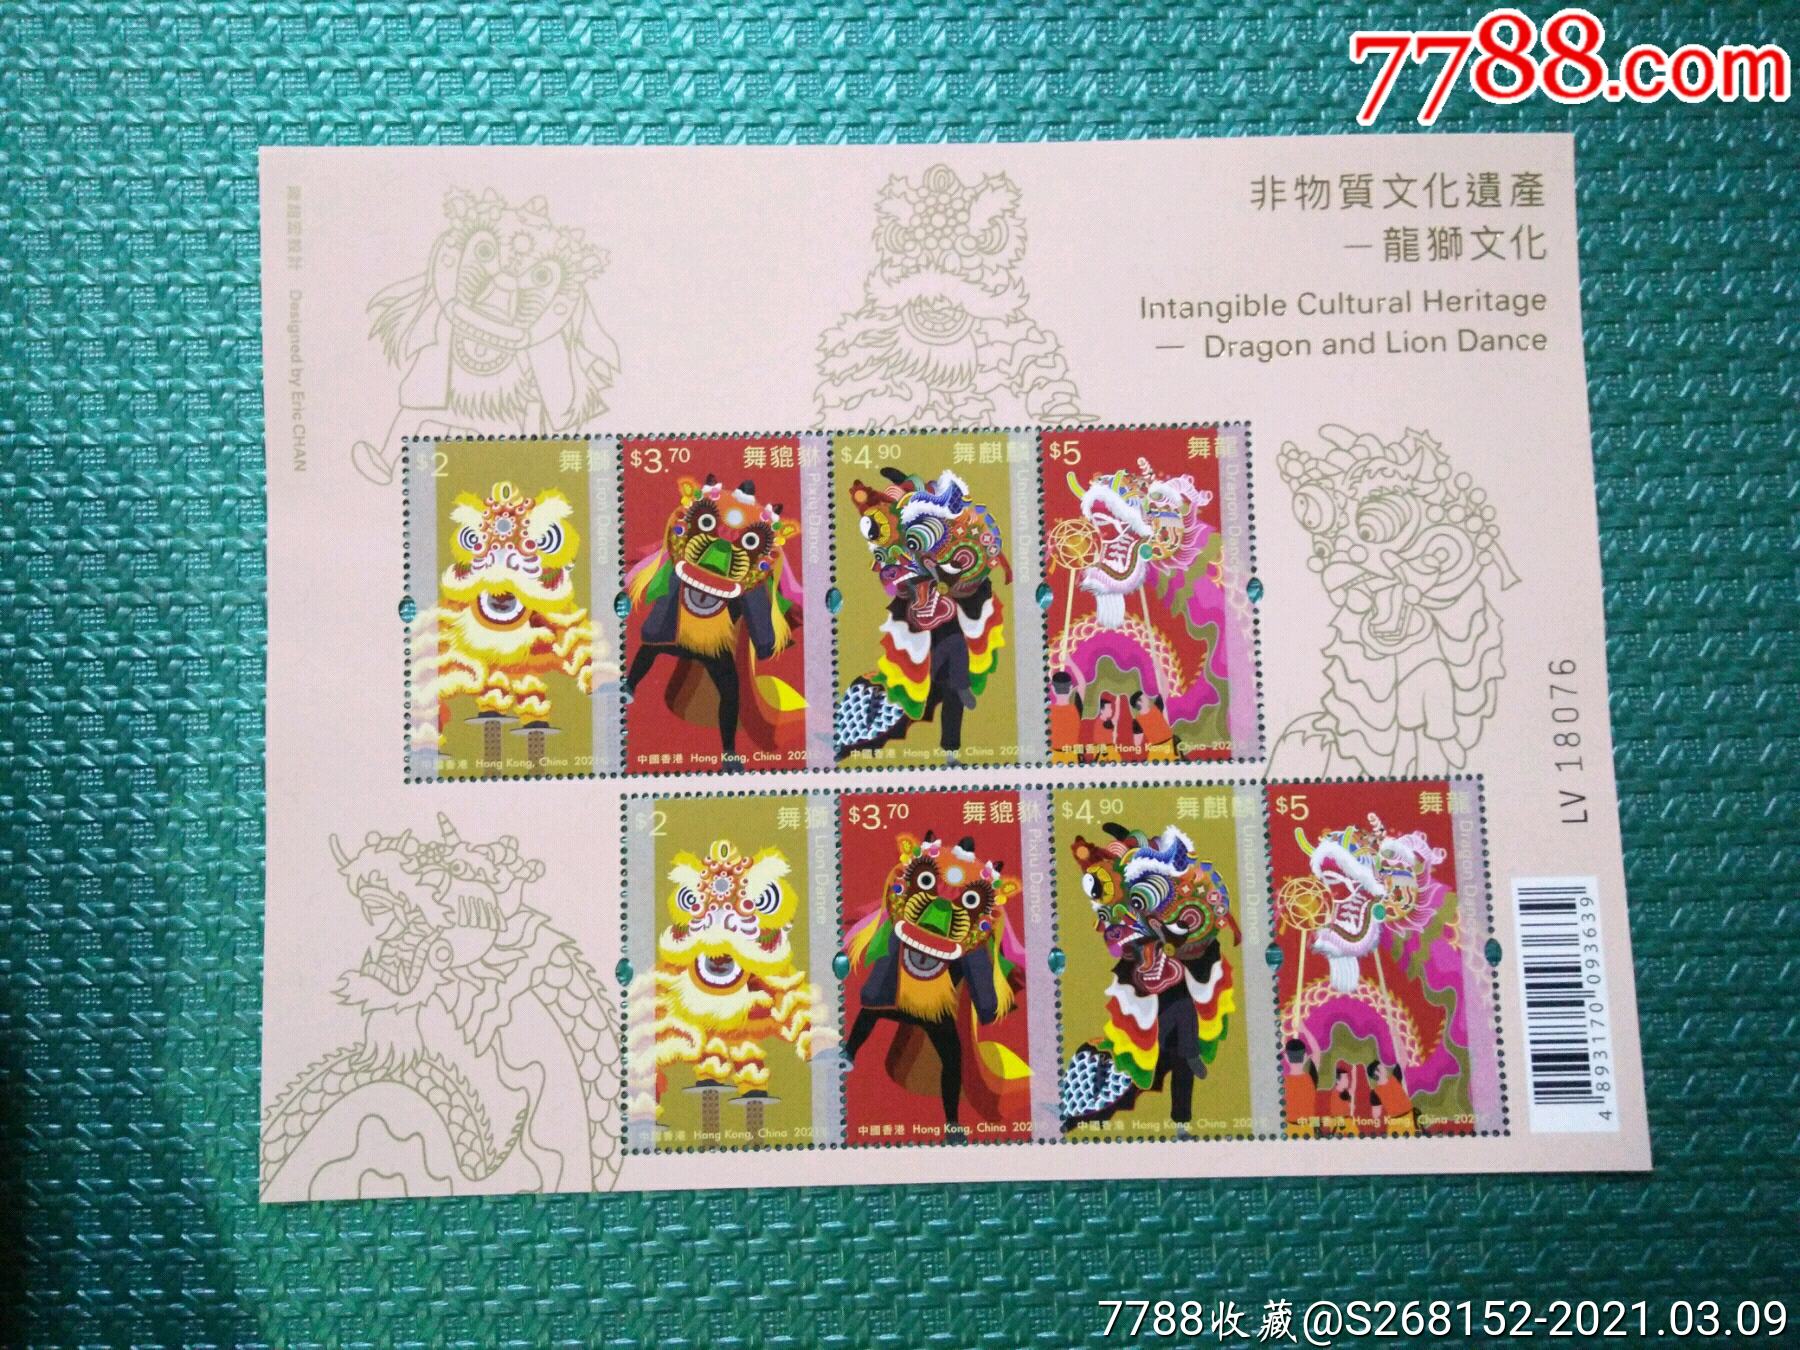 hs285mp香港2021年非物质文化遗产龙狮文化舞龙舞狮邮票小版张